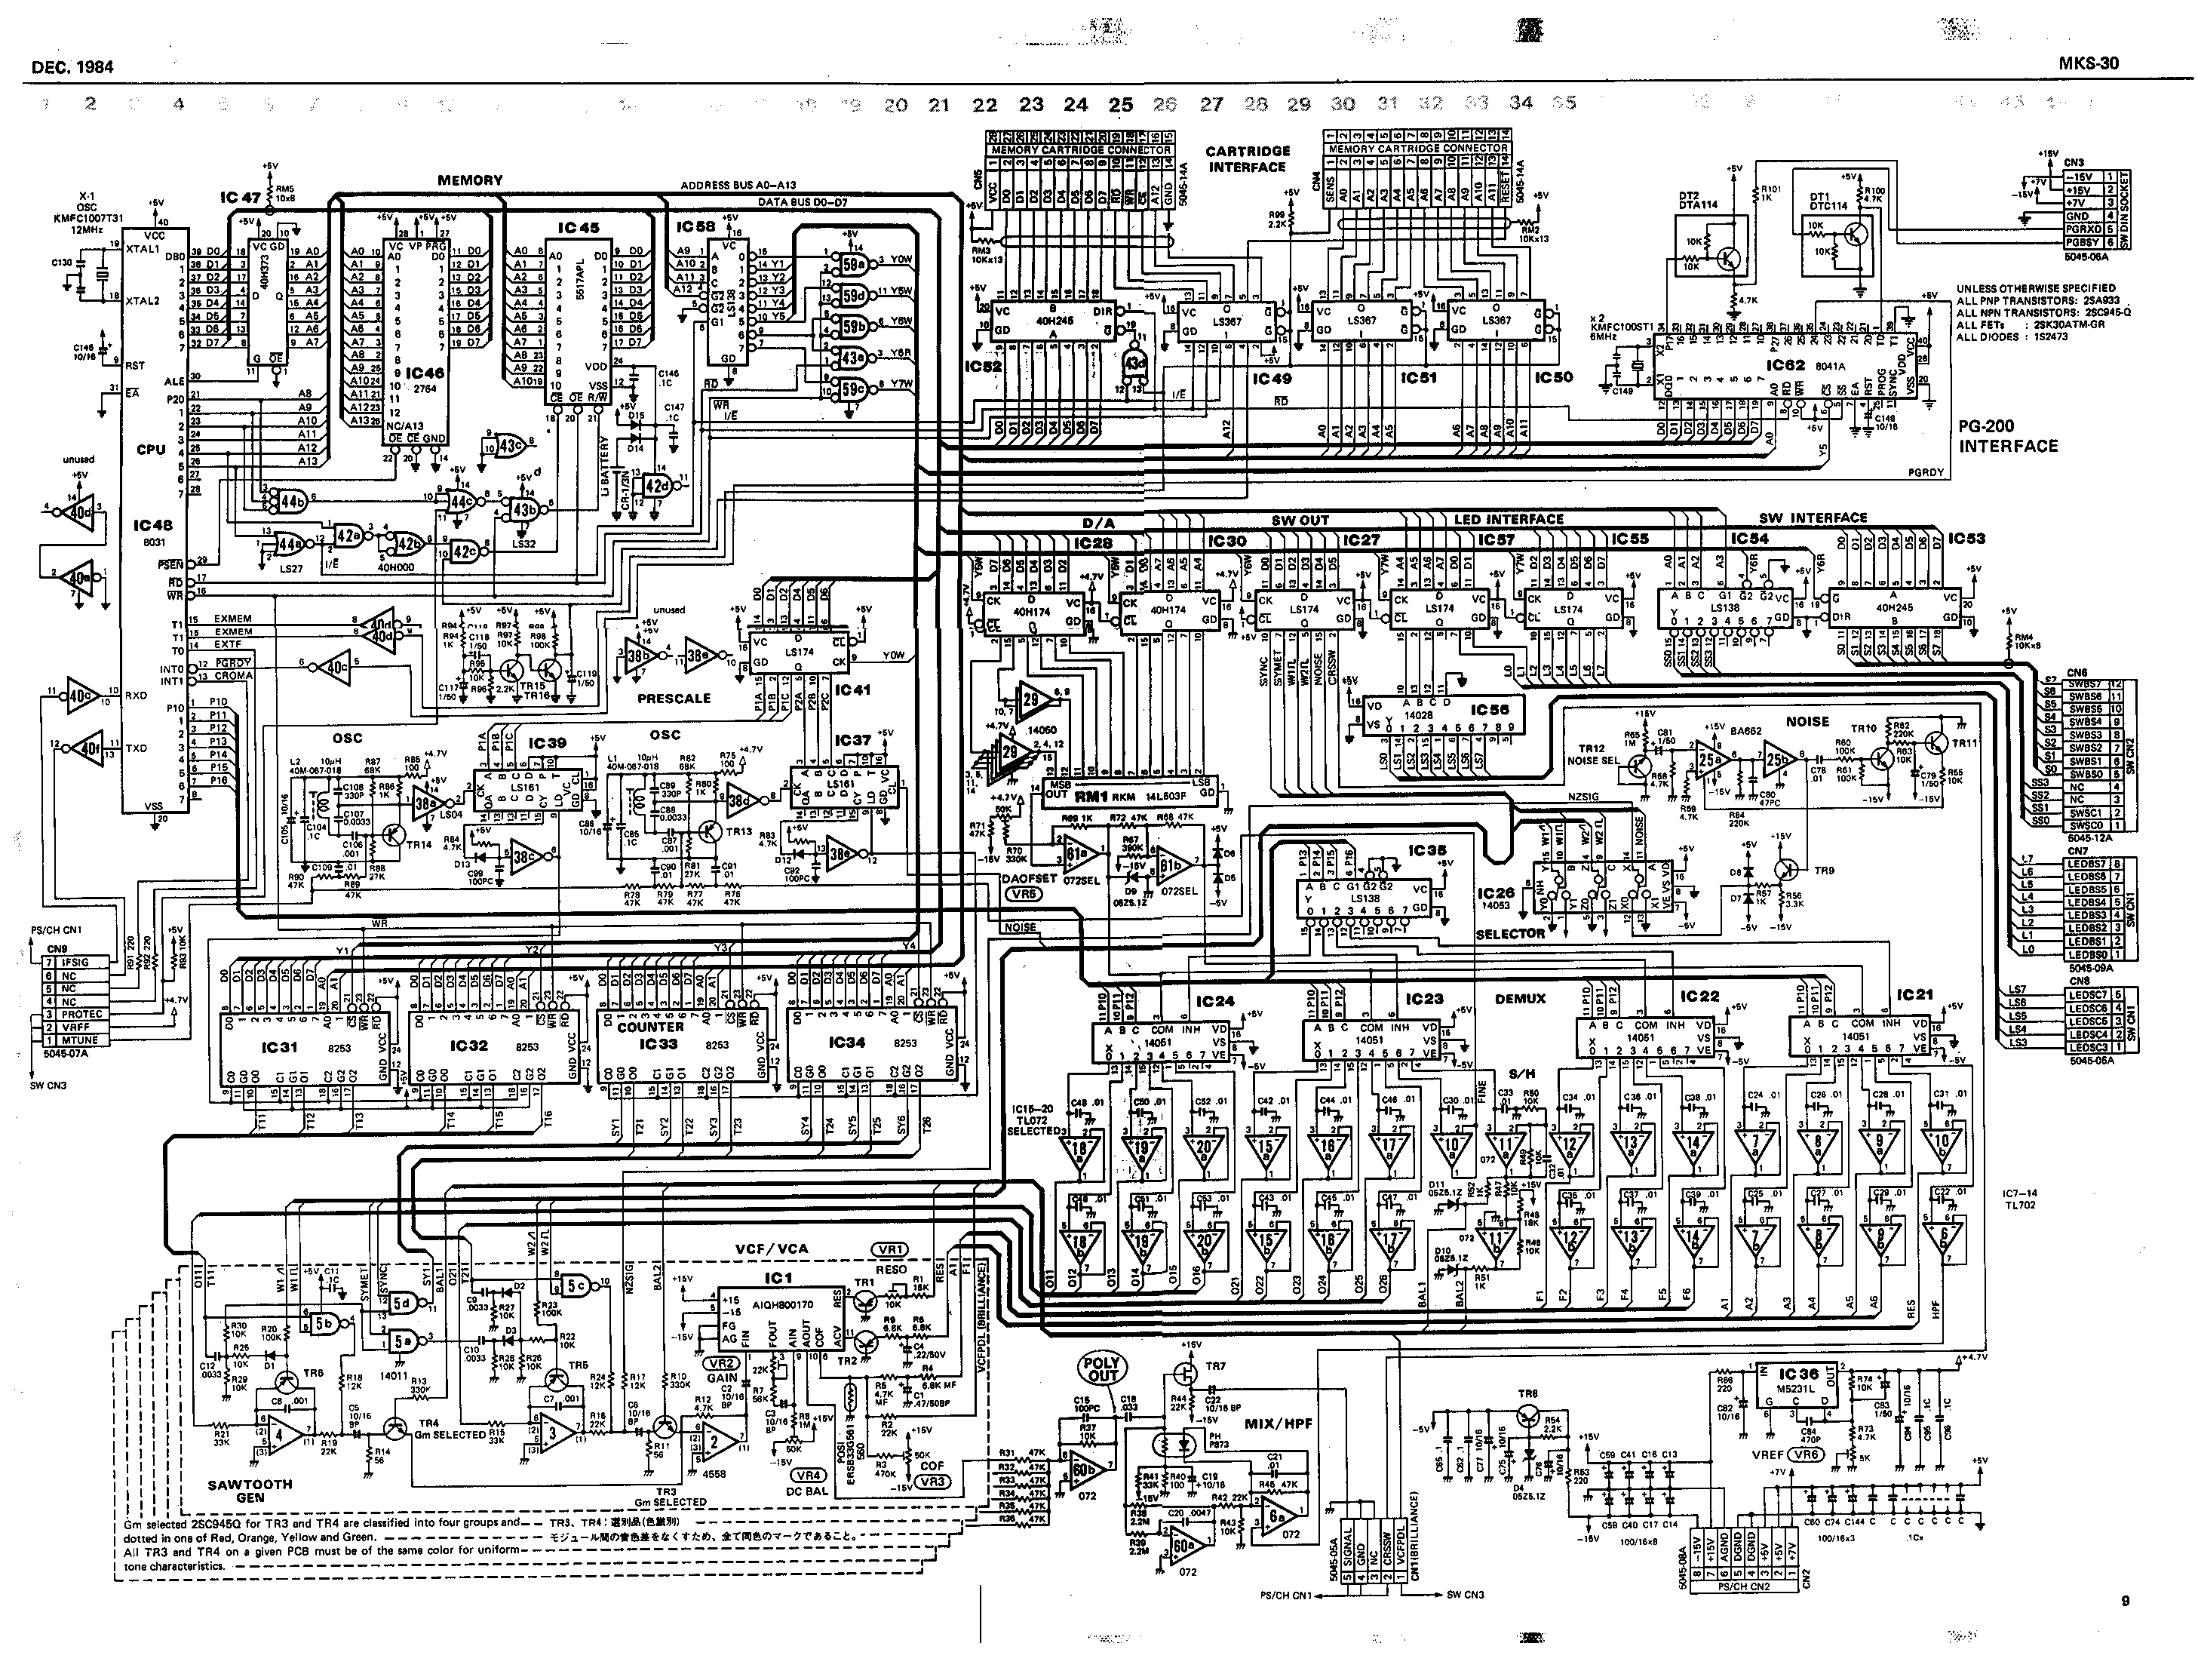 circuits, schematic, diagram - desktop wallpaper